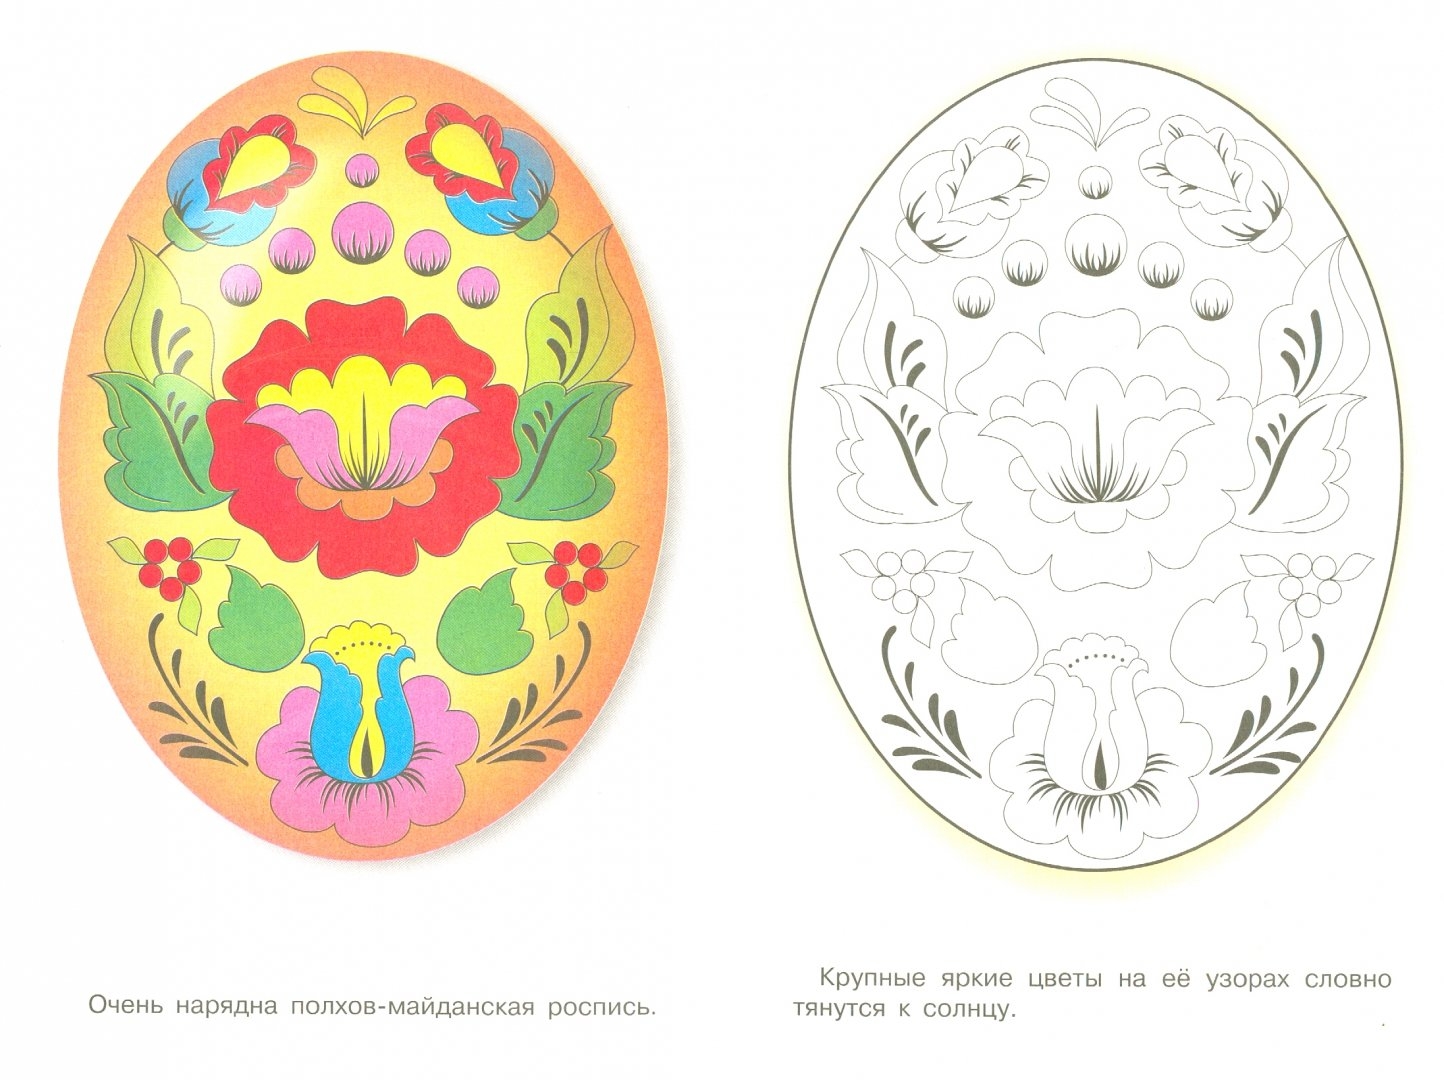 Coloring book famous Polkhov Maidan